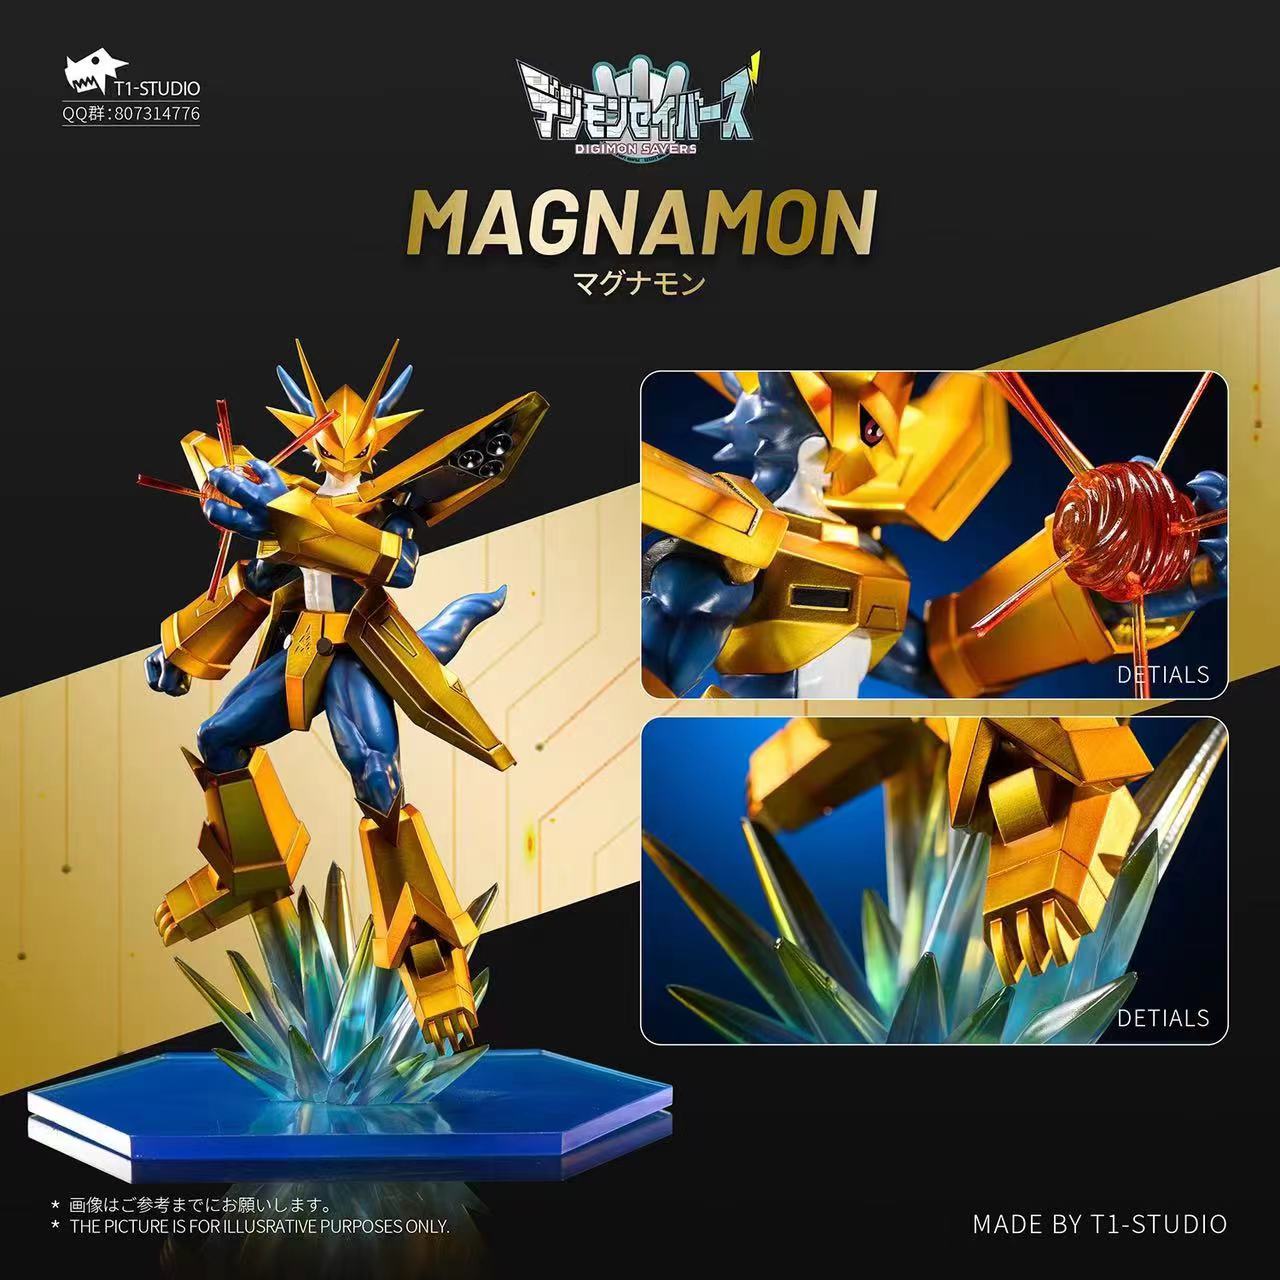 〖Sold Out〗Digimon Magnamon - T1 Studio